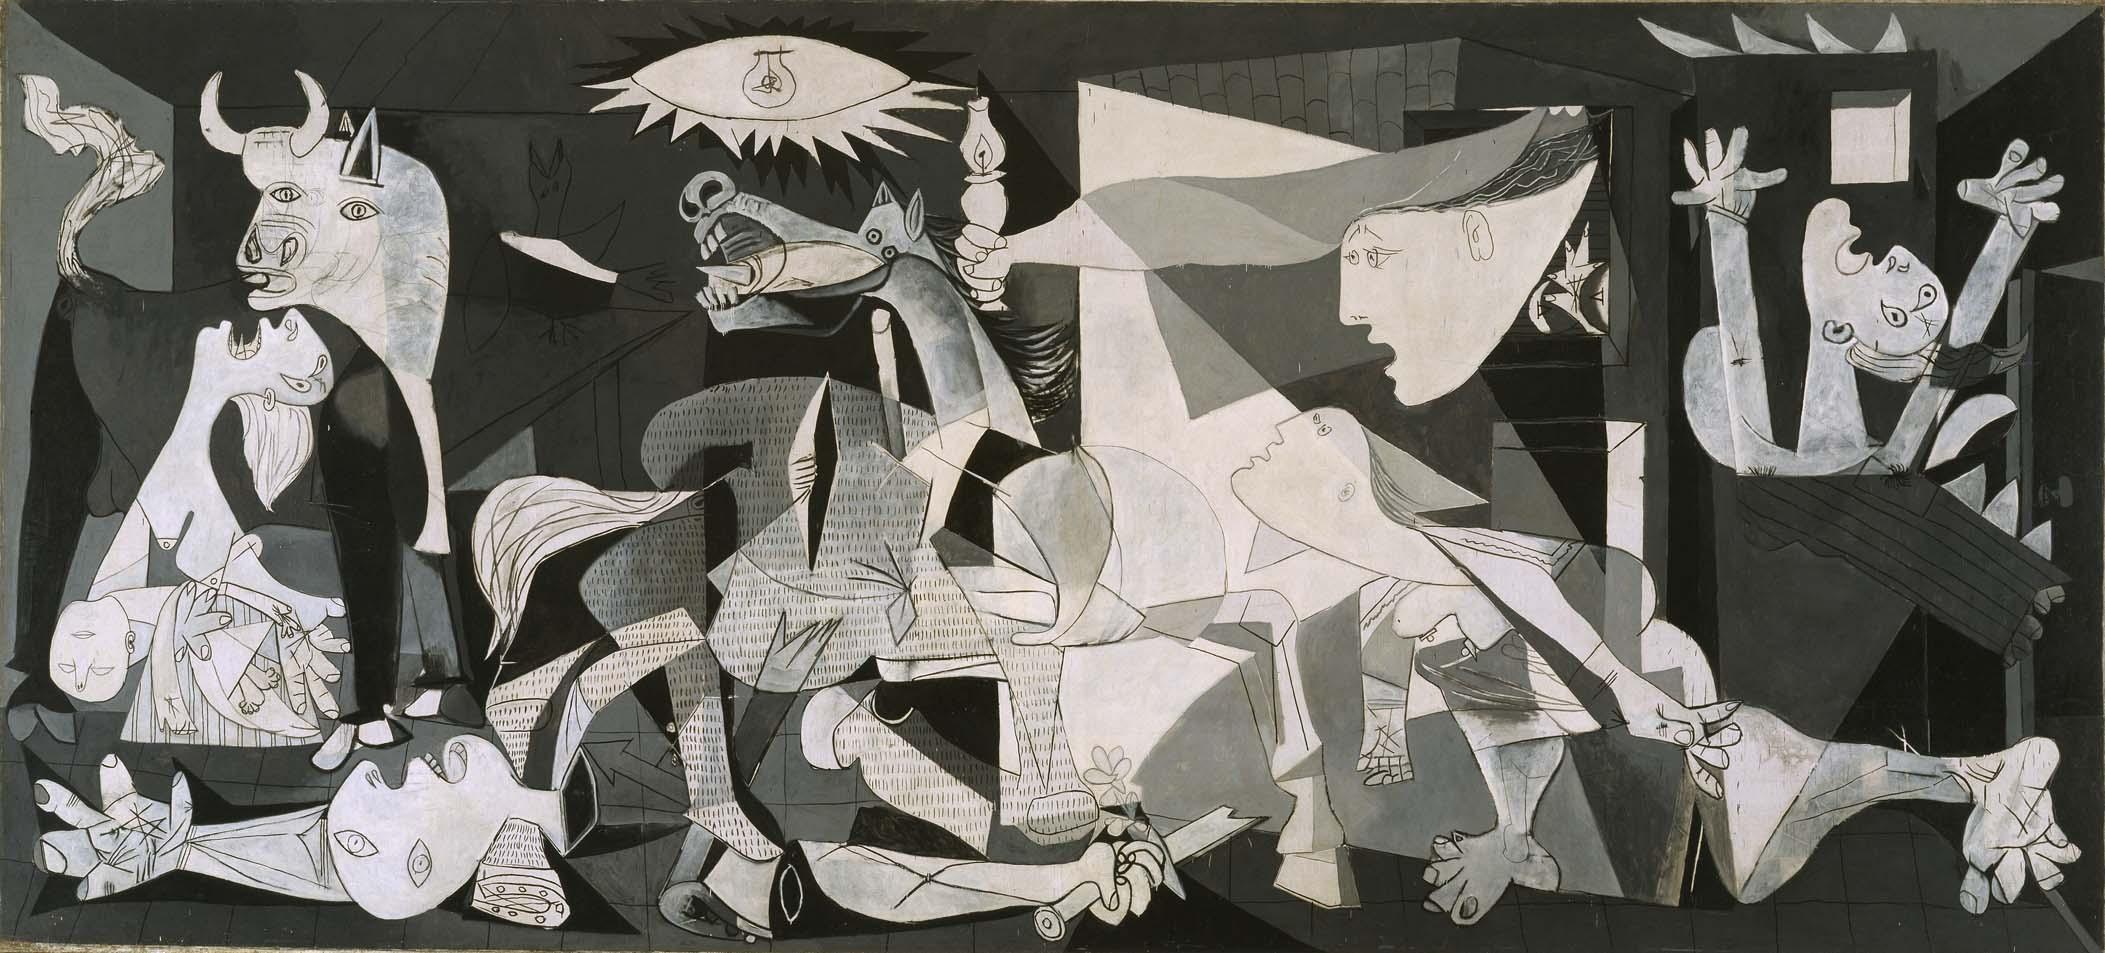 Guernica - Pablo Picasso